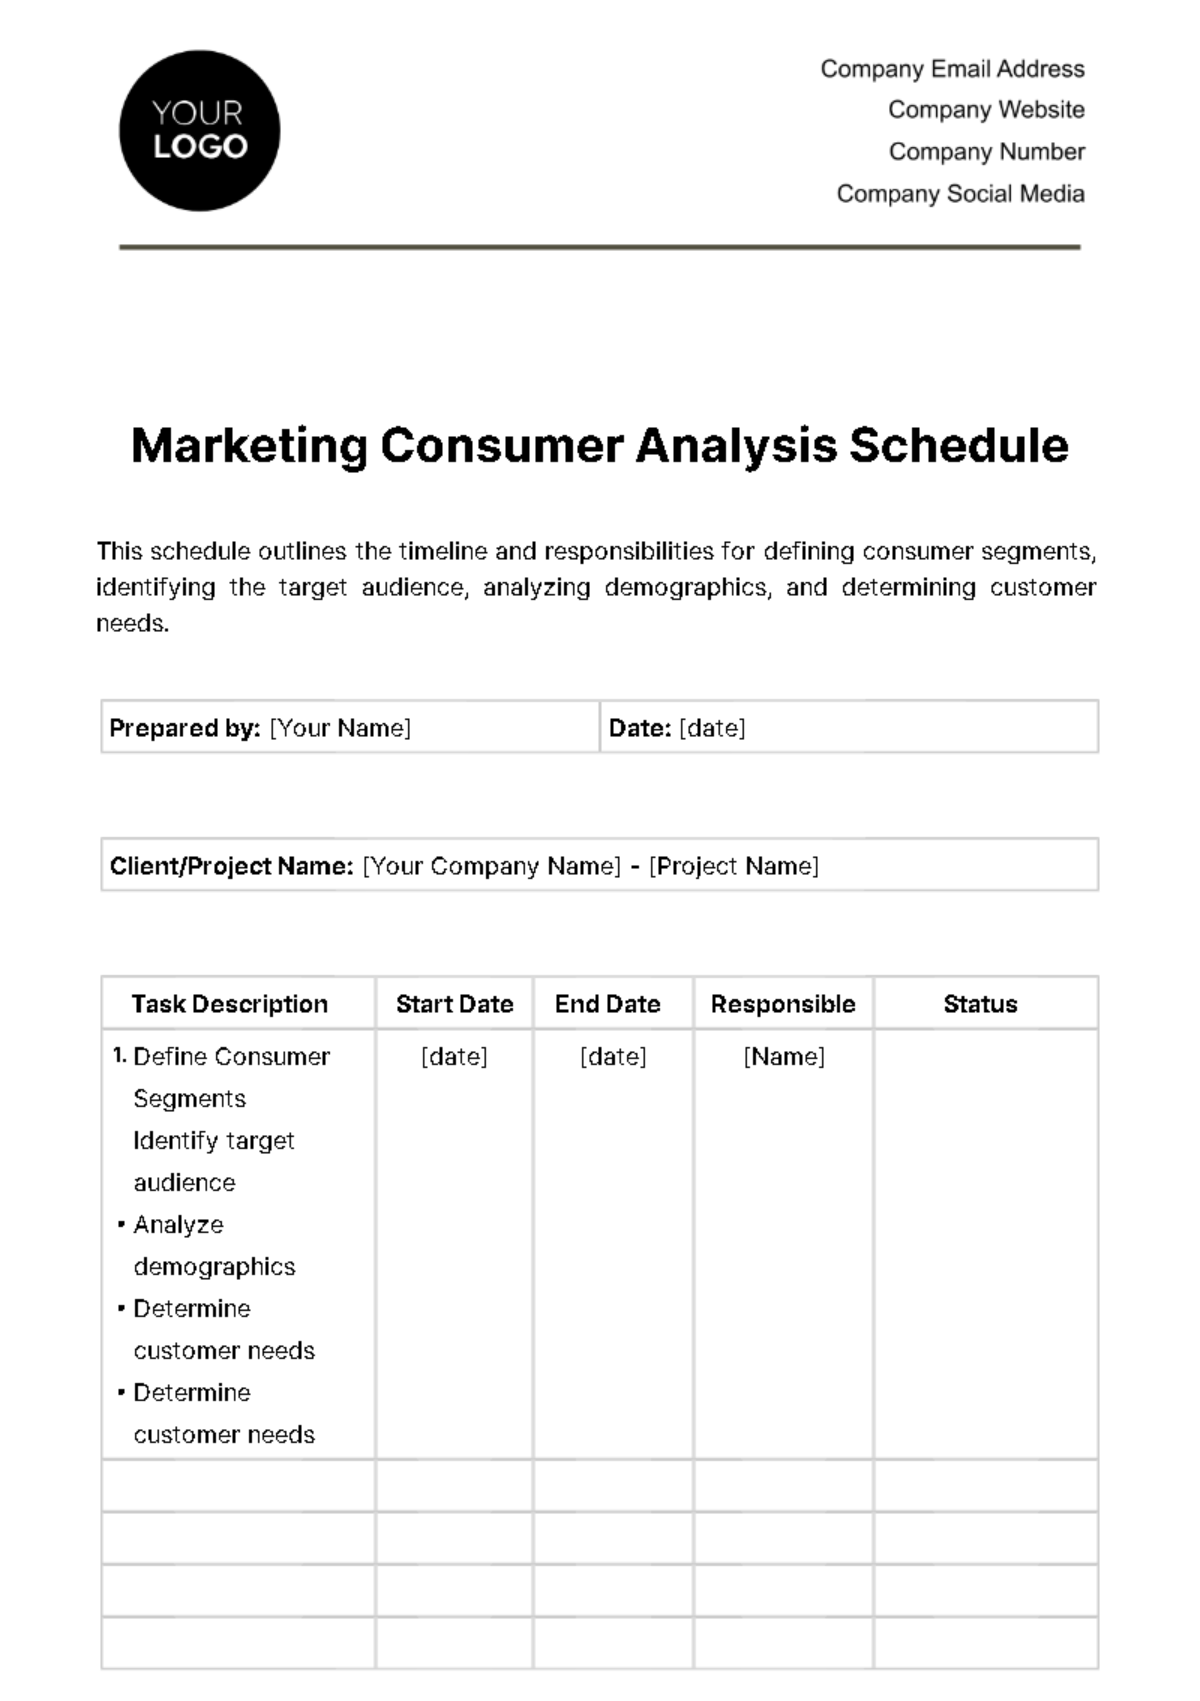 Free Marketing Consumer Analysis Schedule Template